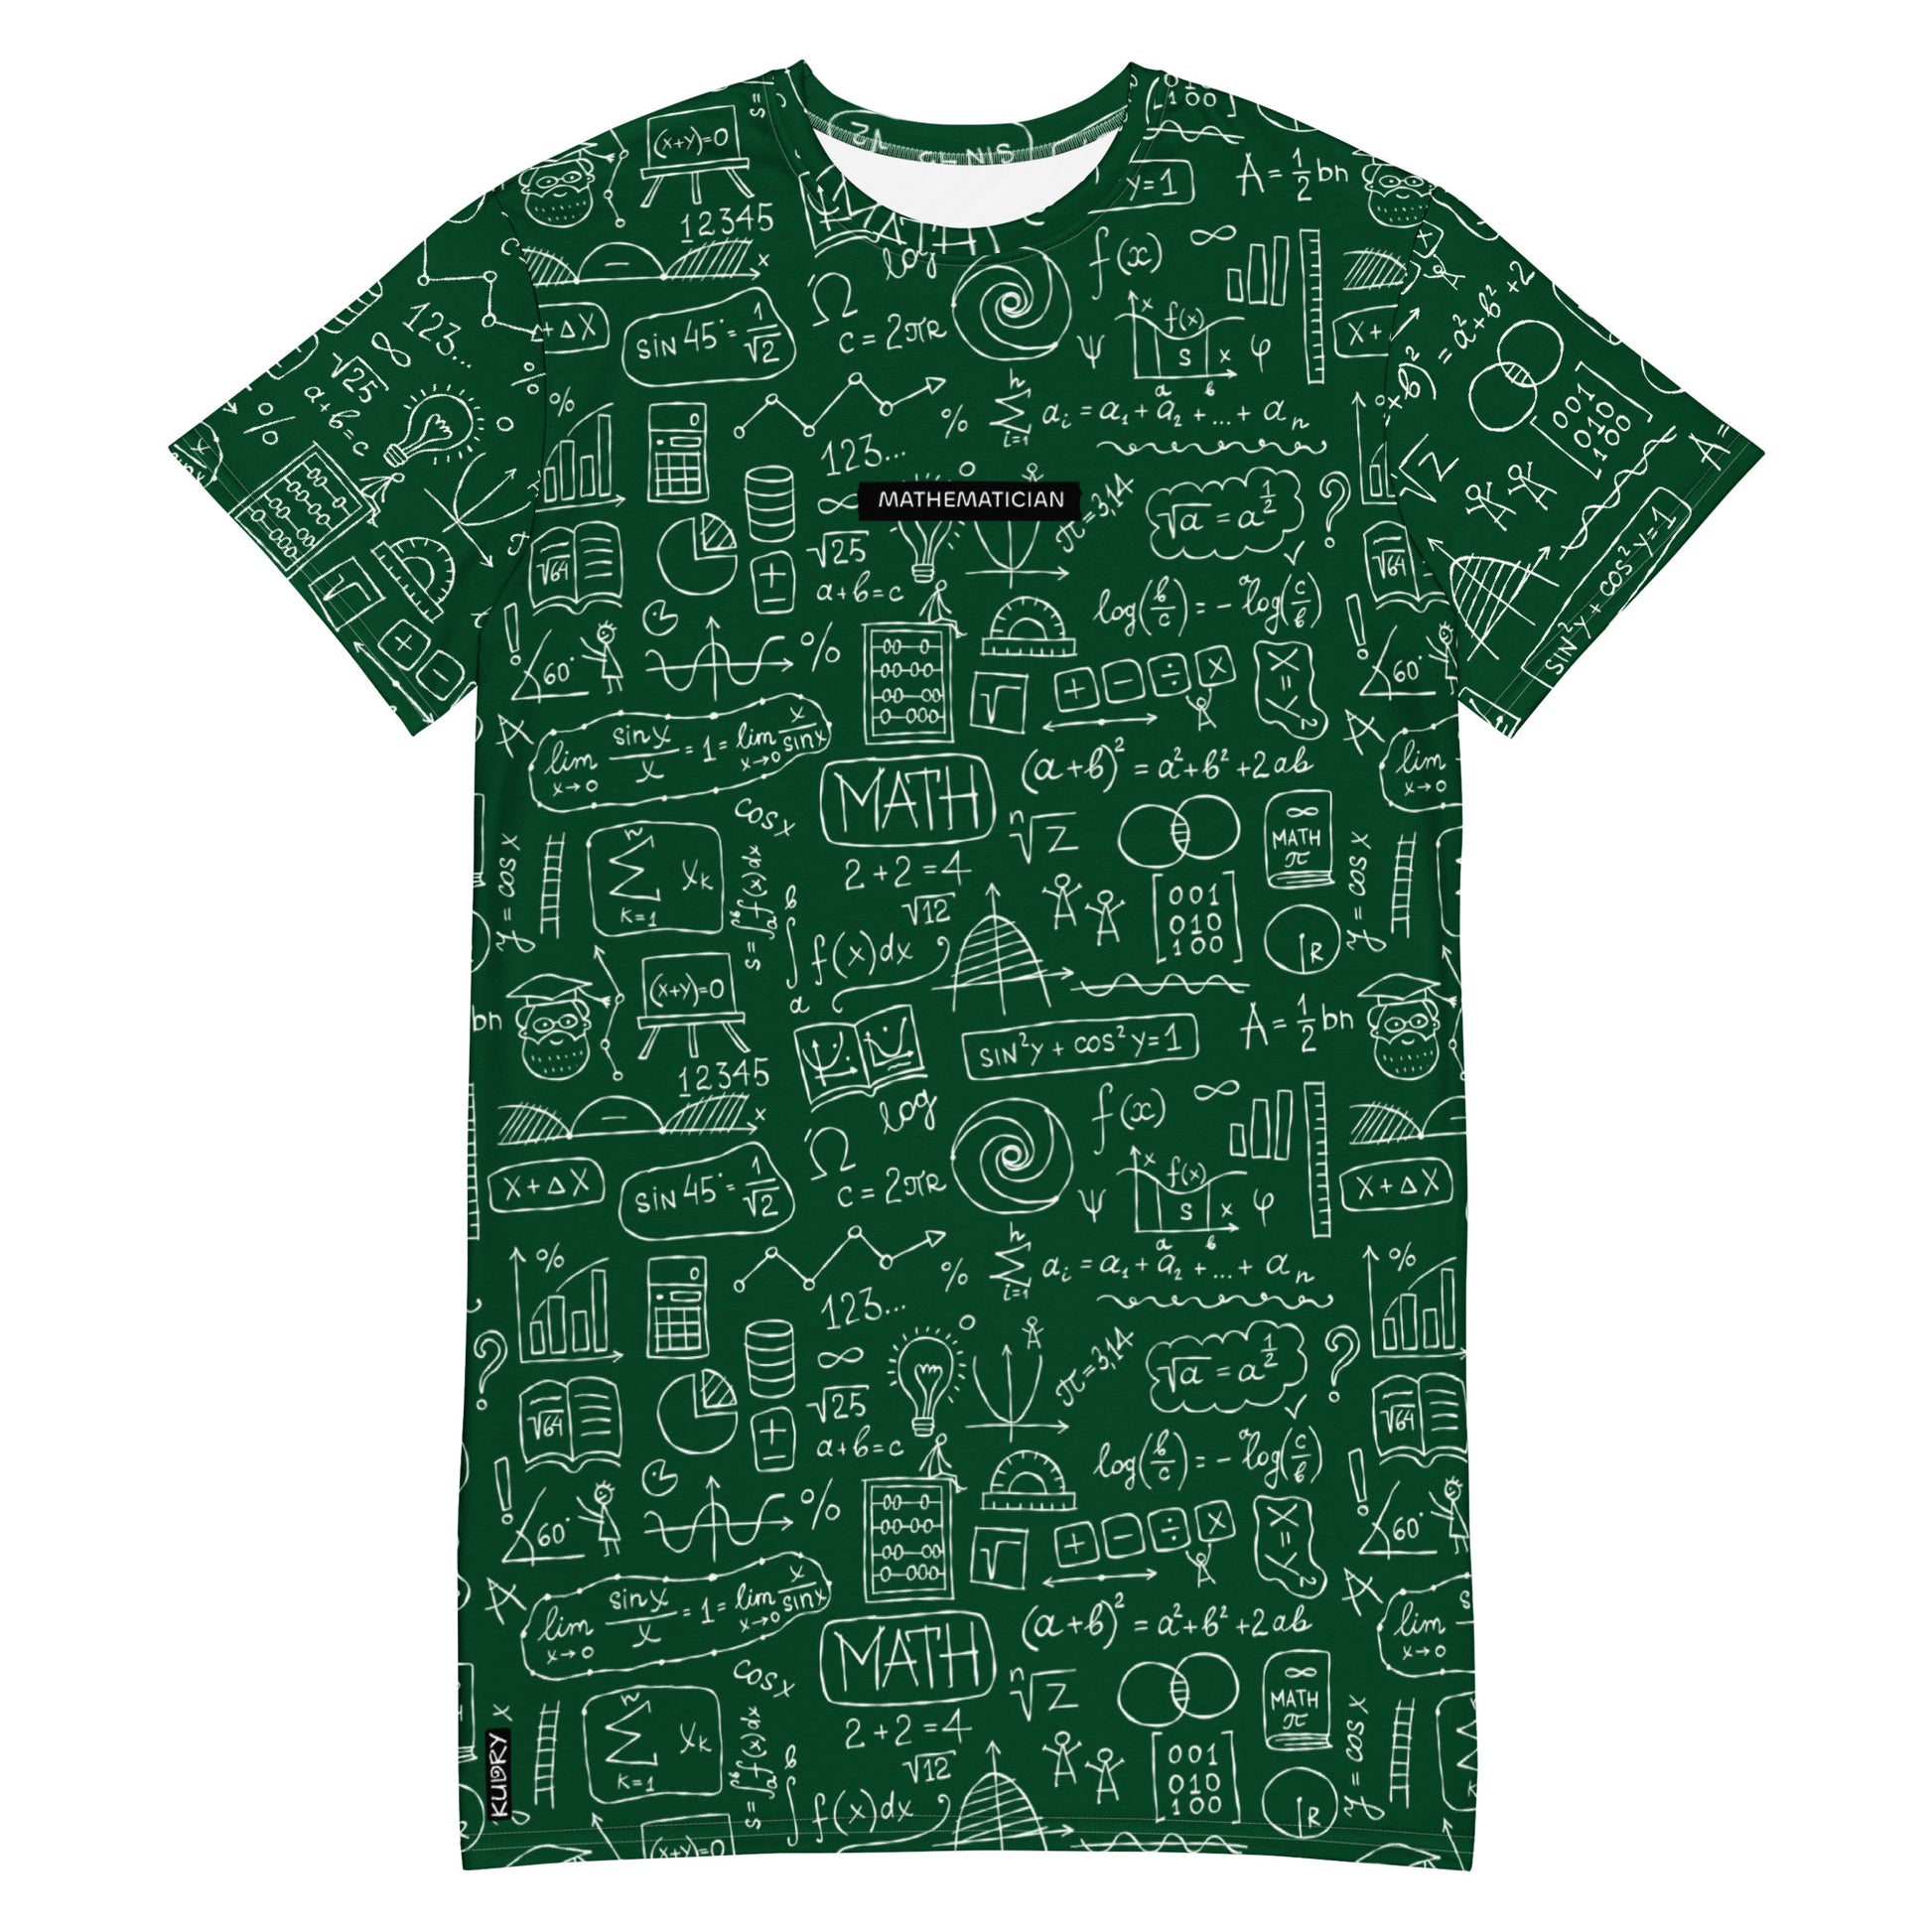 Personalised T-shirt dress with Math Formulas on dark green. Basic text on dress - Mathematician. 